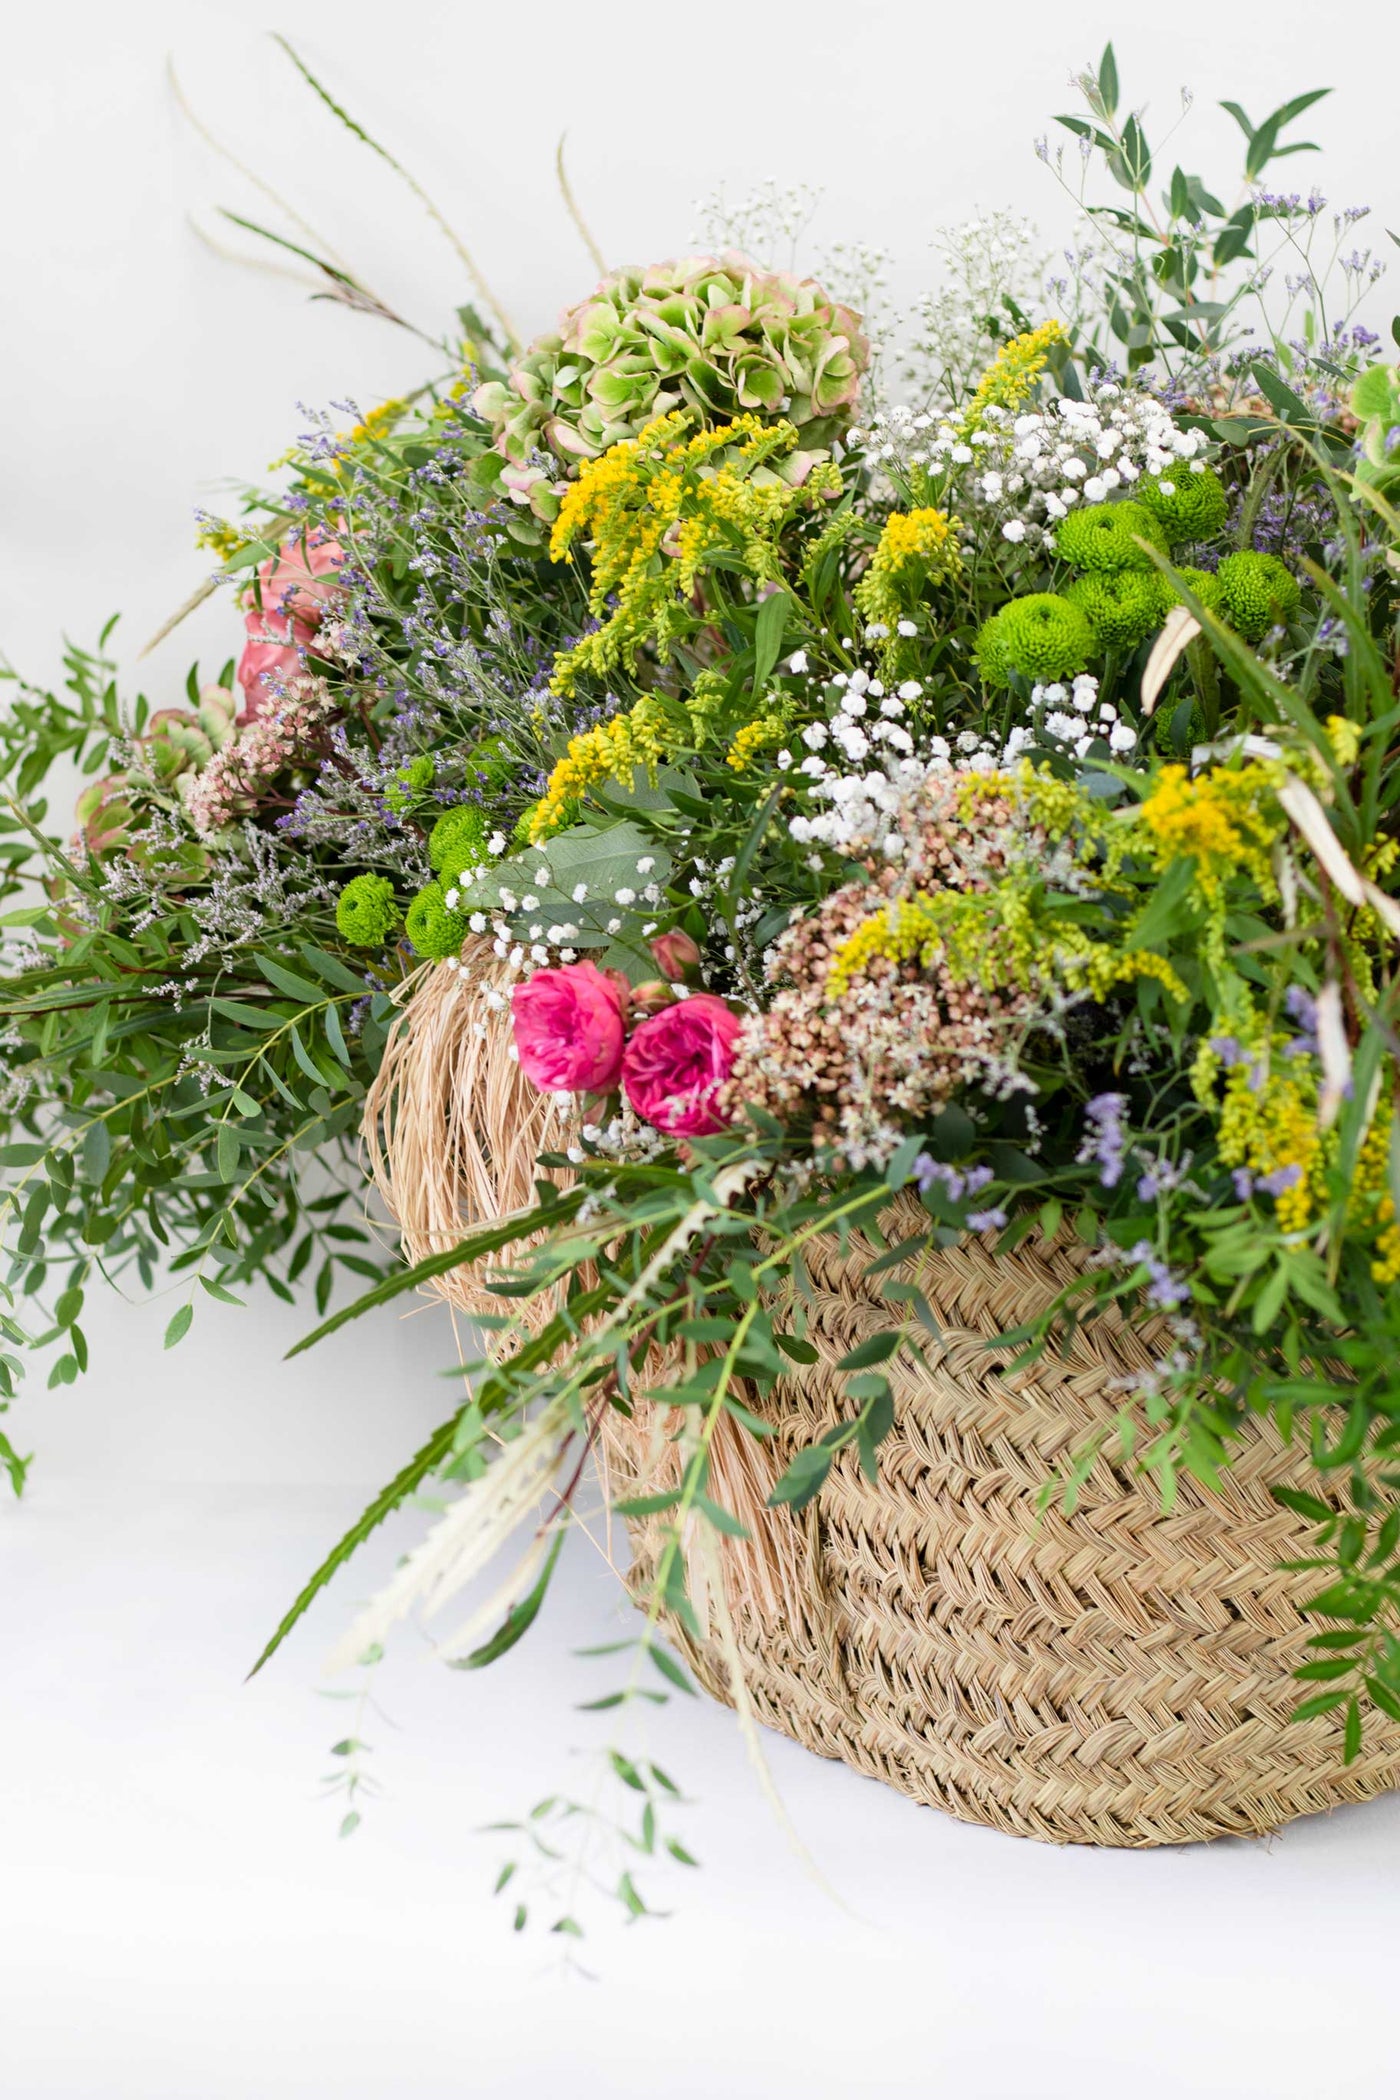 Giant basket of fresh flowers BIG SURPRISE